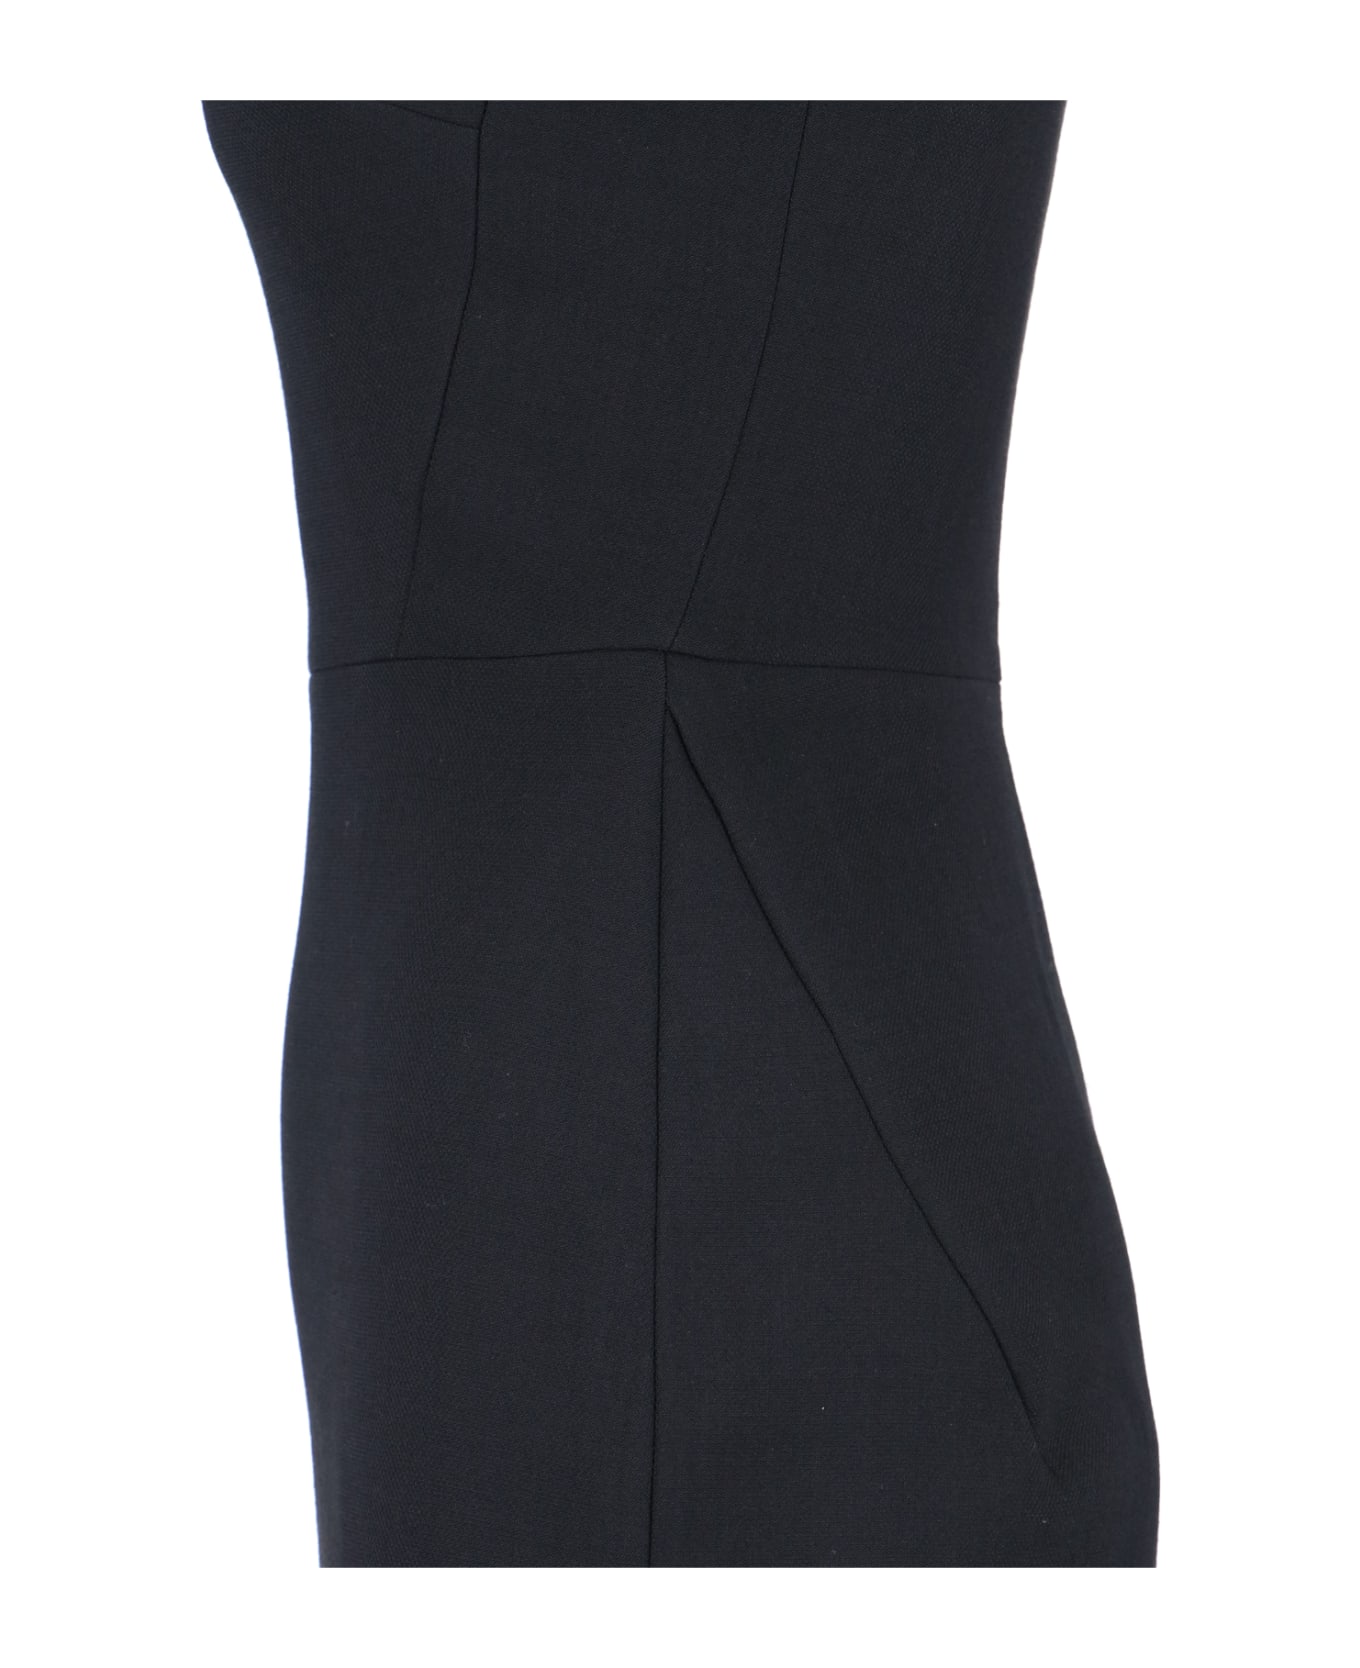 Victoria Beckham Midi T-shirt Dress - Black   ワンピース＆ドレス